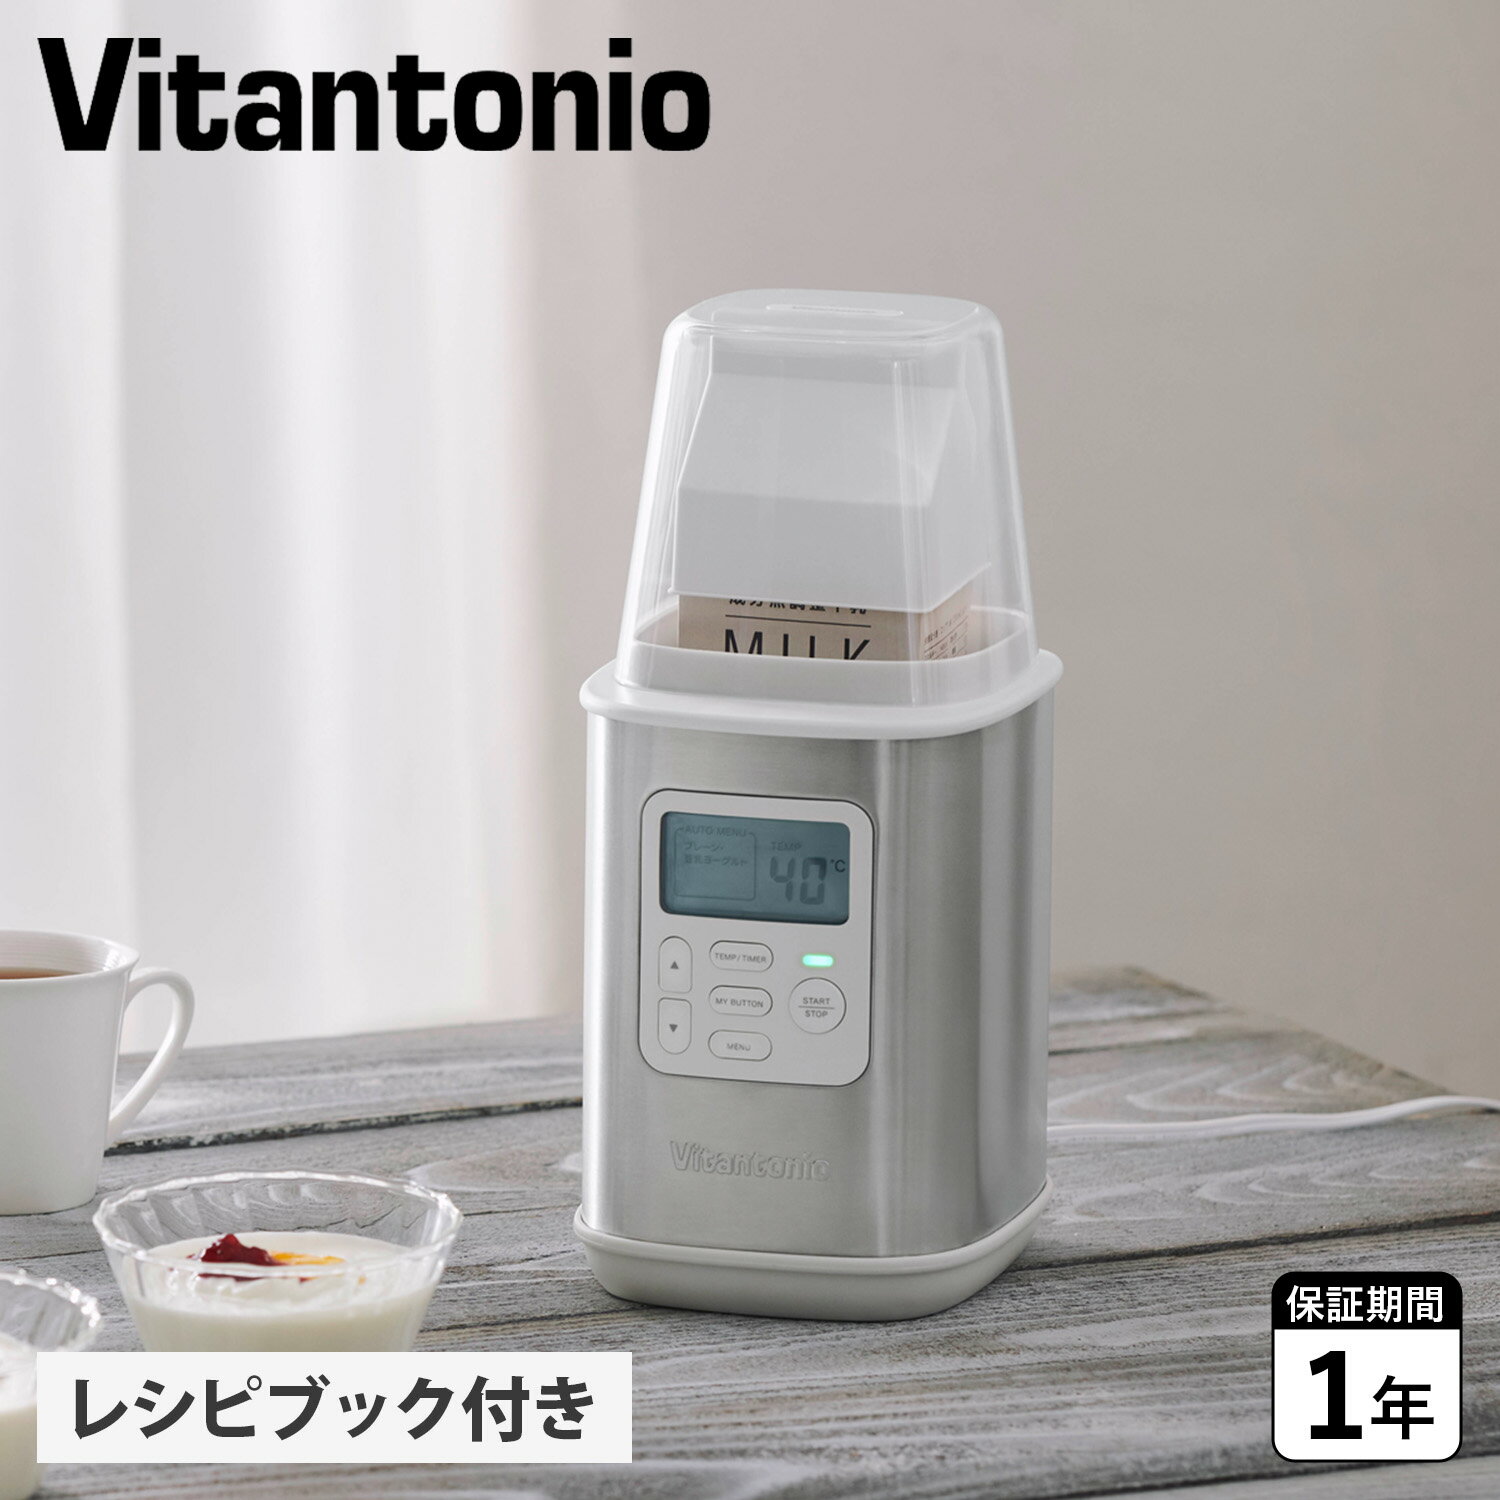 Vitantonio ビタントニオ ヨーグルトメーカー 発酵フードメーカー 水切り 牛乳パック対応 コンパクト 低温調理 手作り 自家製 VYG-60